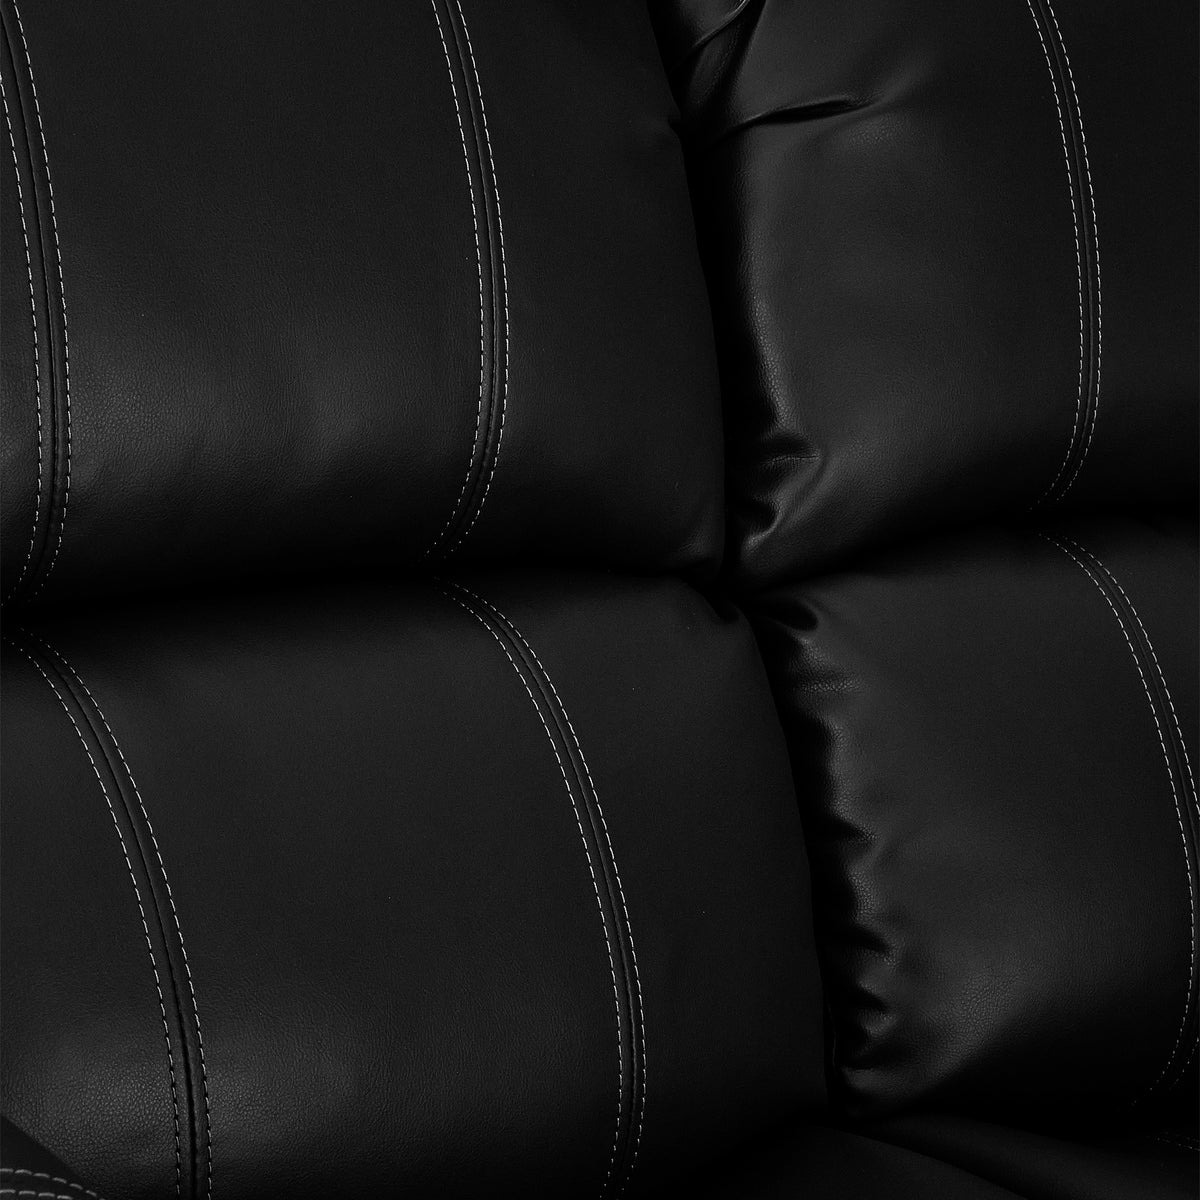 Anton Black Leather Reclining 3 Seater Sofa